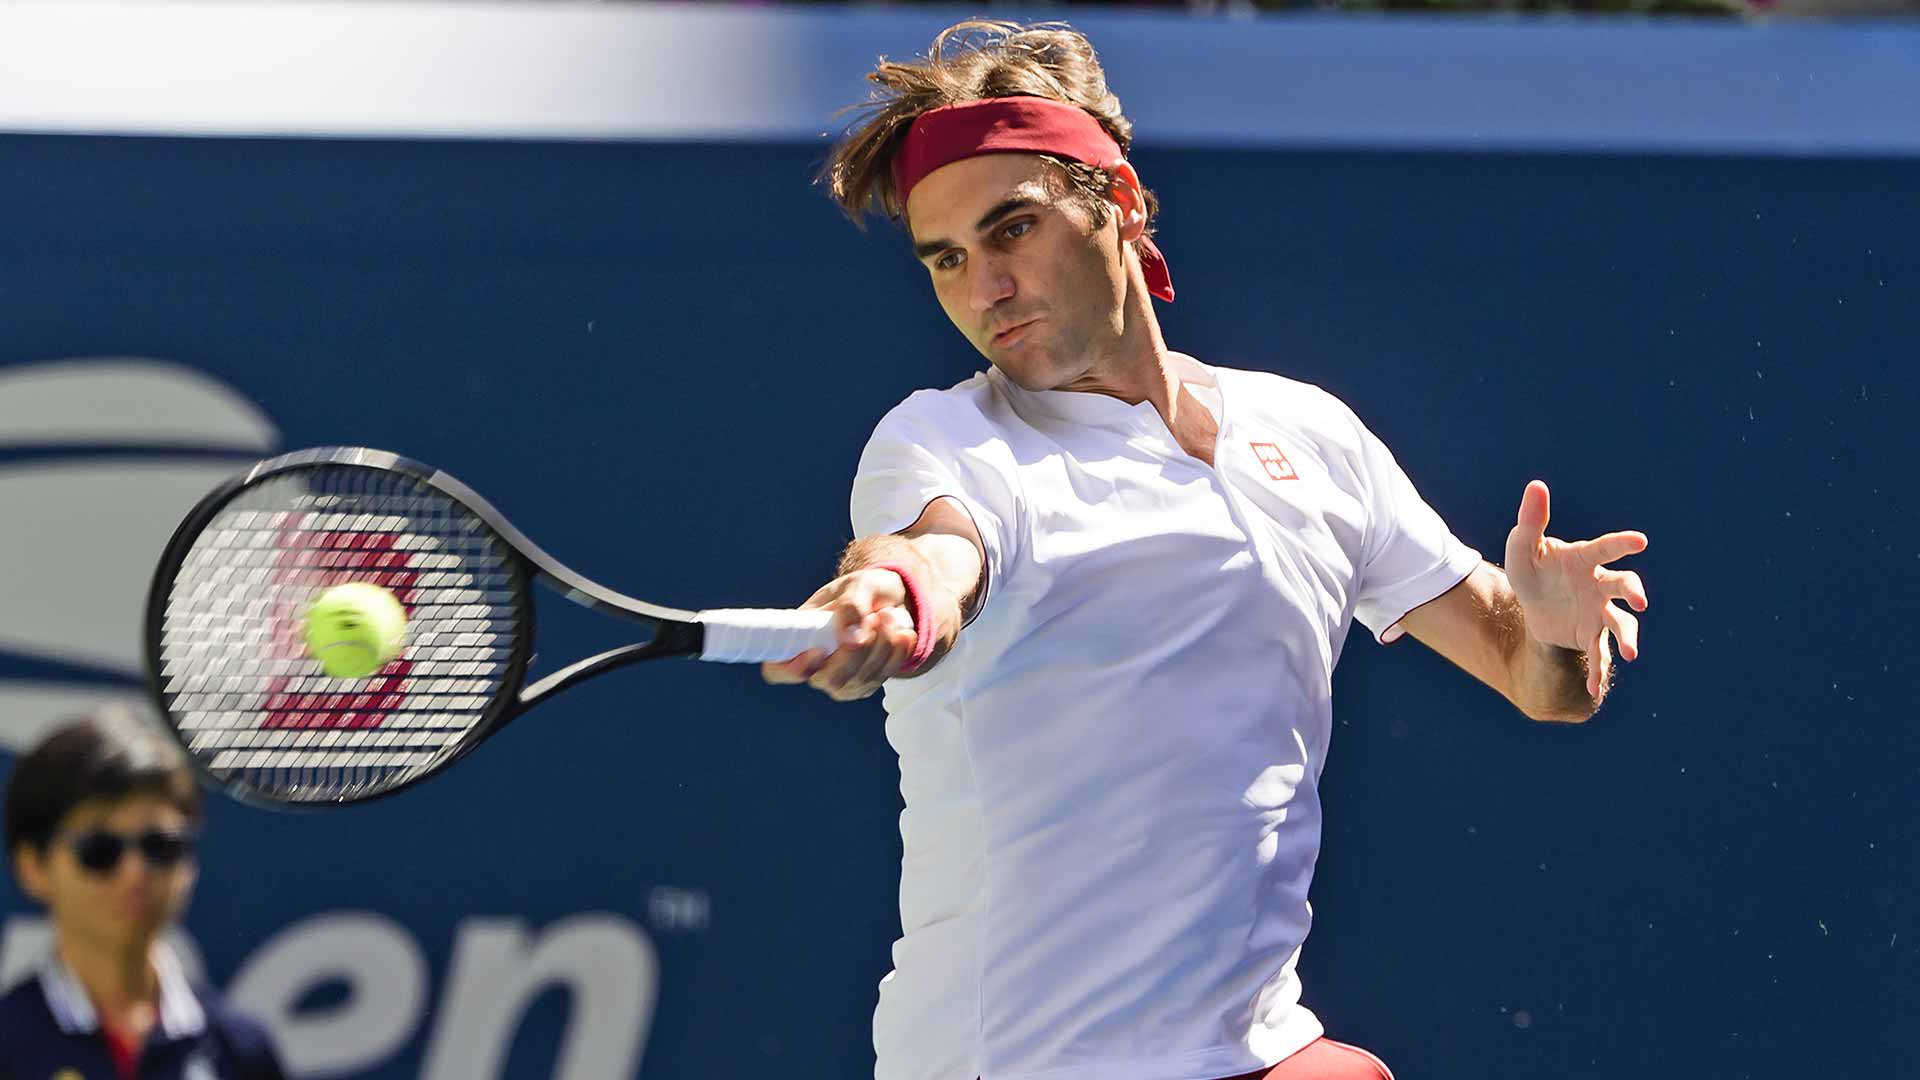 Roger Federer last won the US Open in 2008.